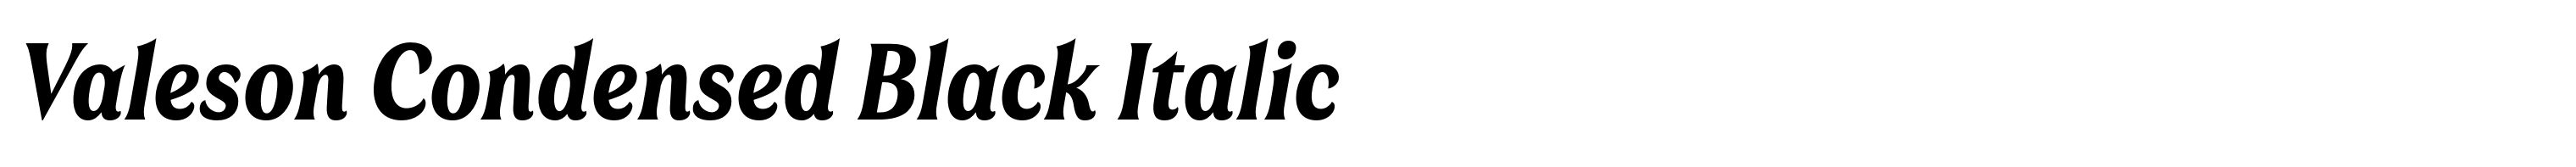 Valeson Condensed Black Italic